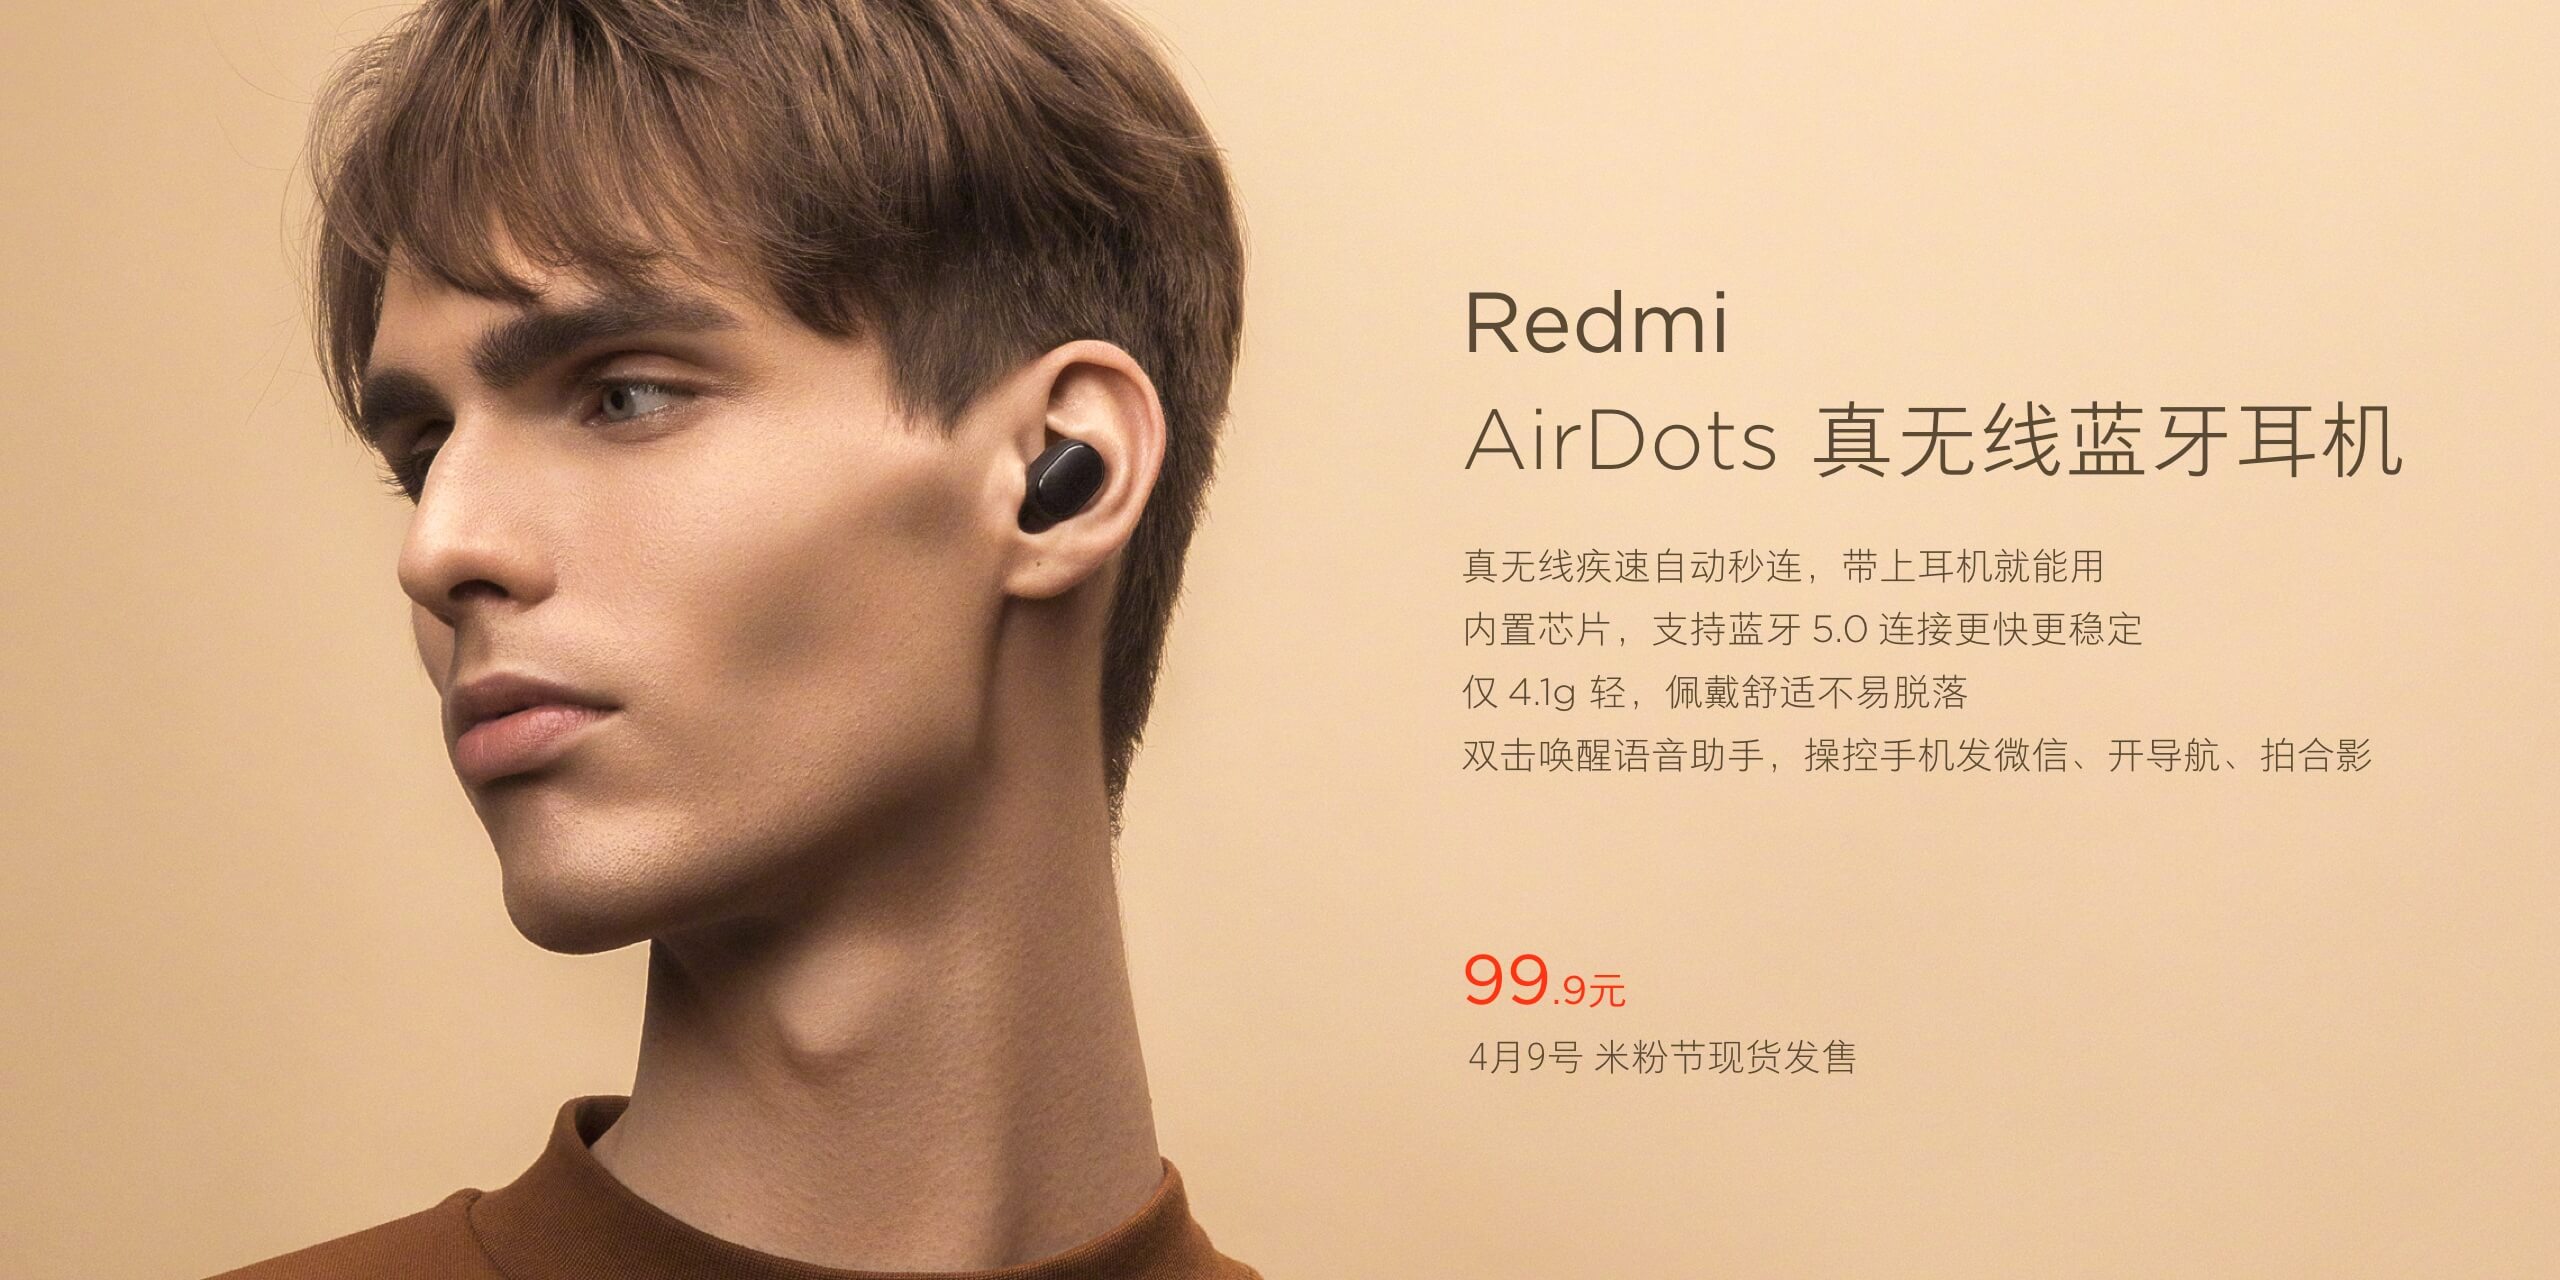 Xiaomi представила беспроводные наушники Redmi AirDots за $15